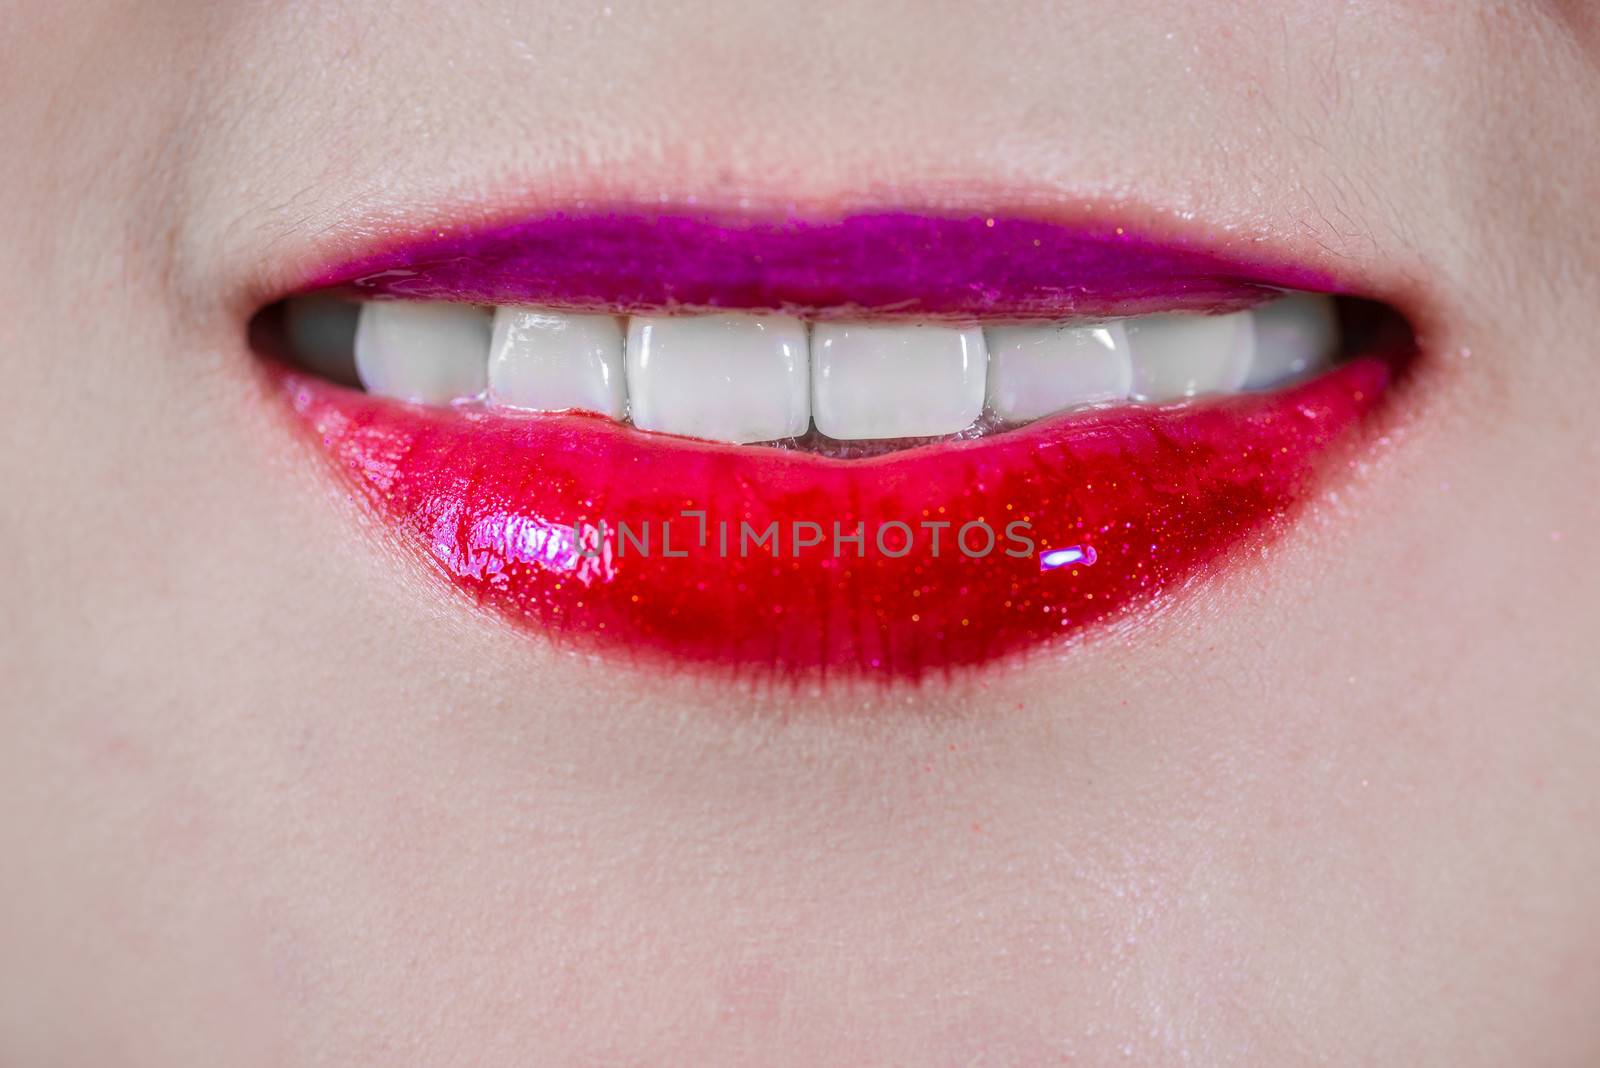 Closeup of woman's lips with makeup smiling